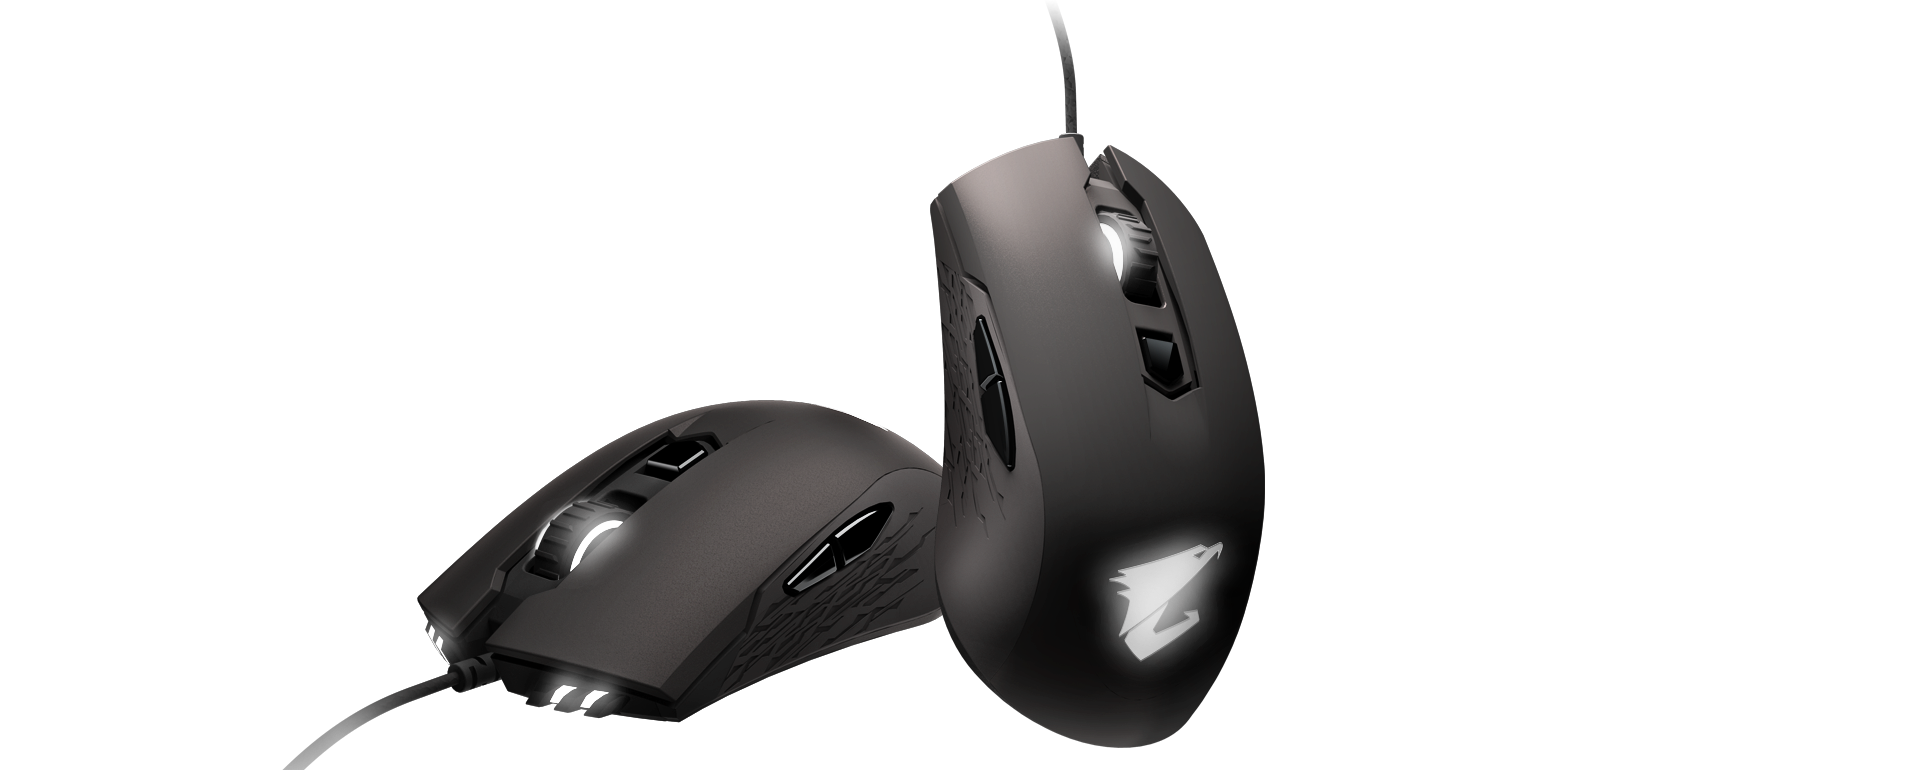 AORUS M4 Key Features | Mouse - GIGABYTE U.S.A.